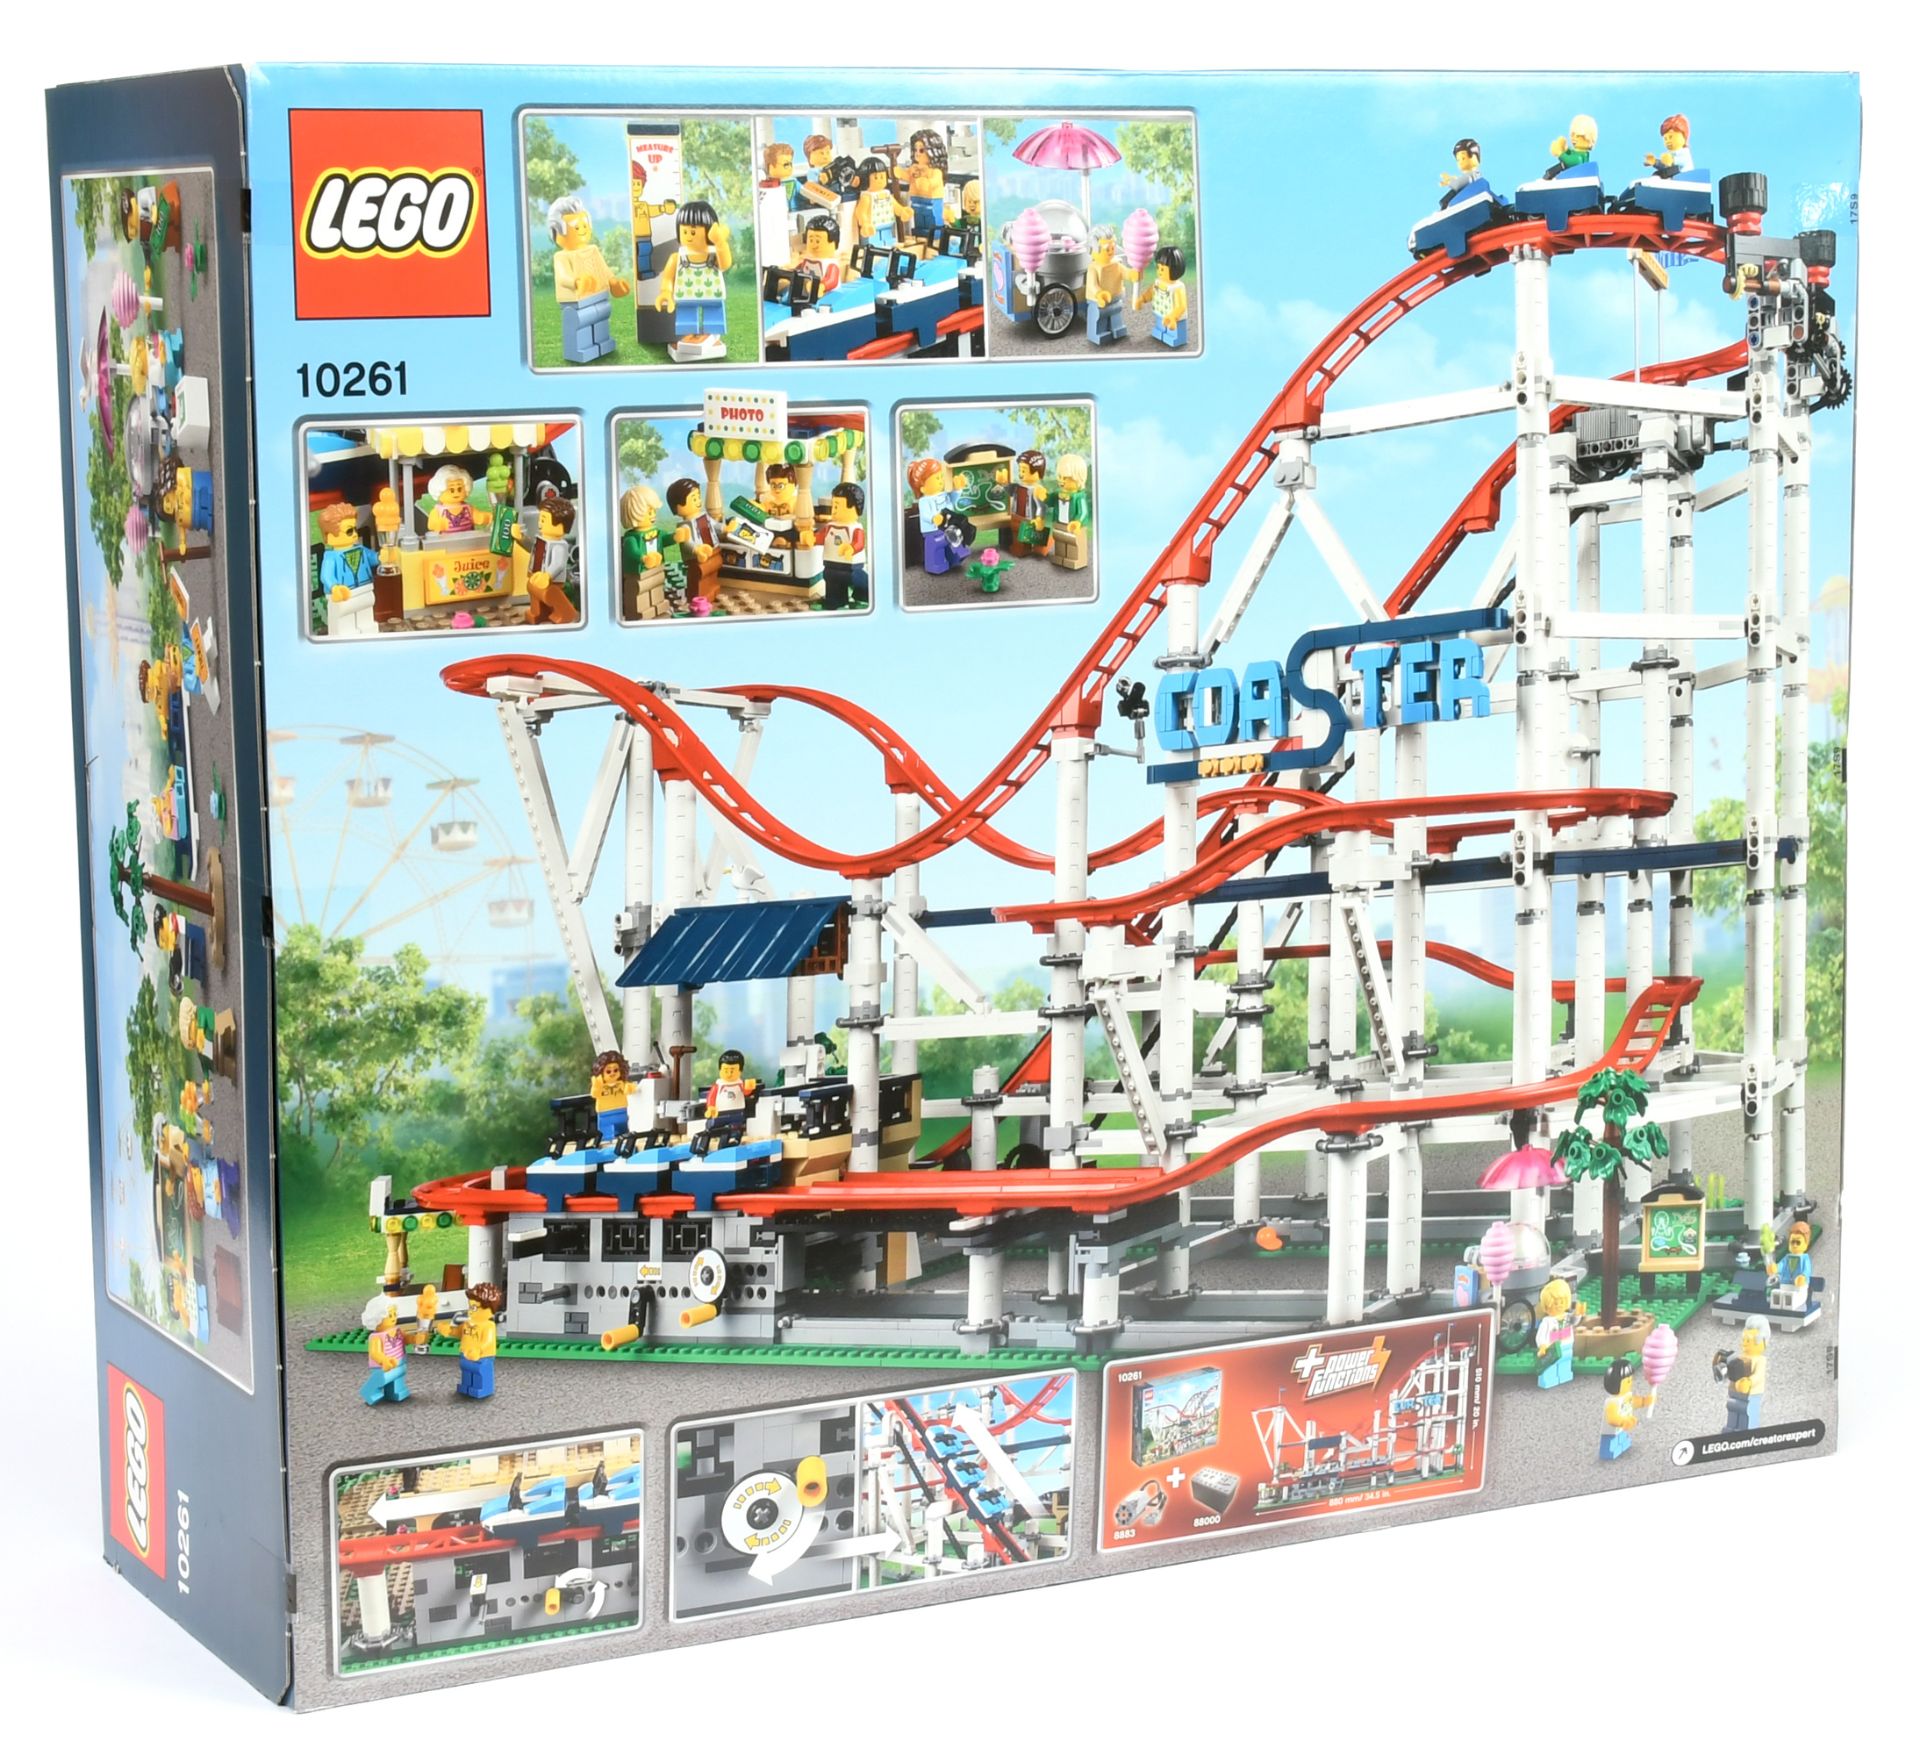 Lego 10261 Creator - Roller Coaster, within Near Mint sealed box. - Bild 2 aus 2